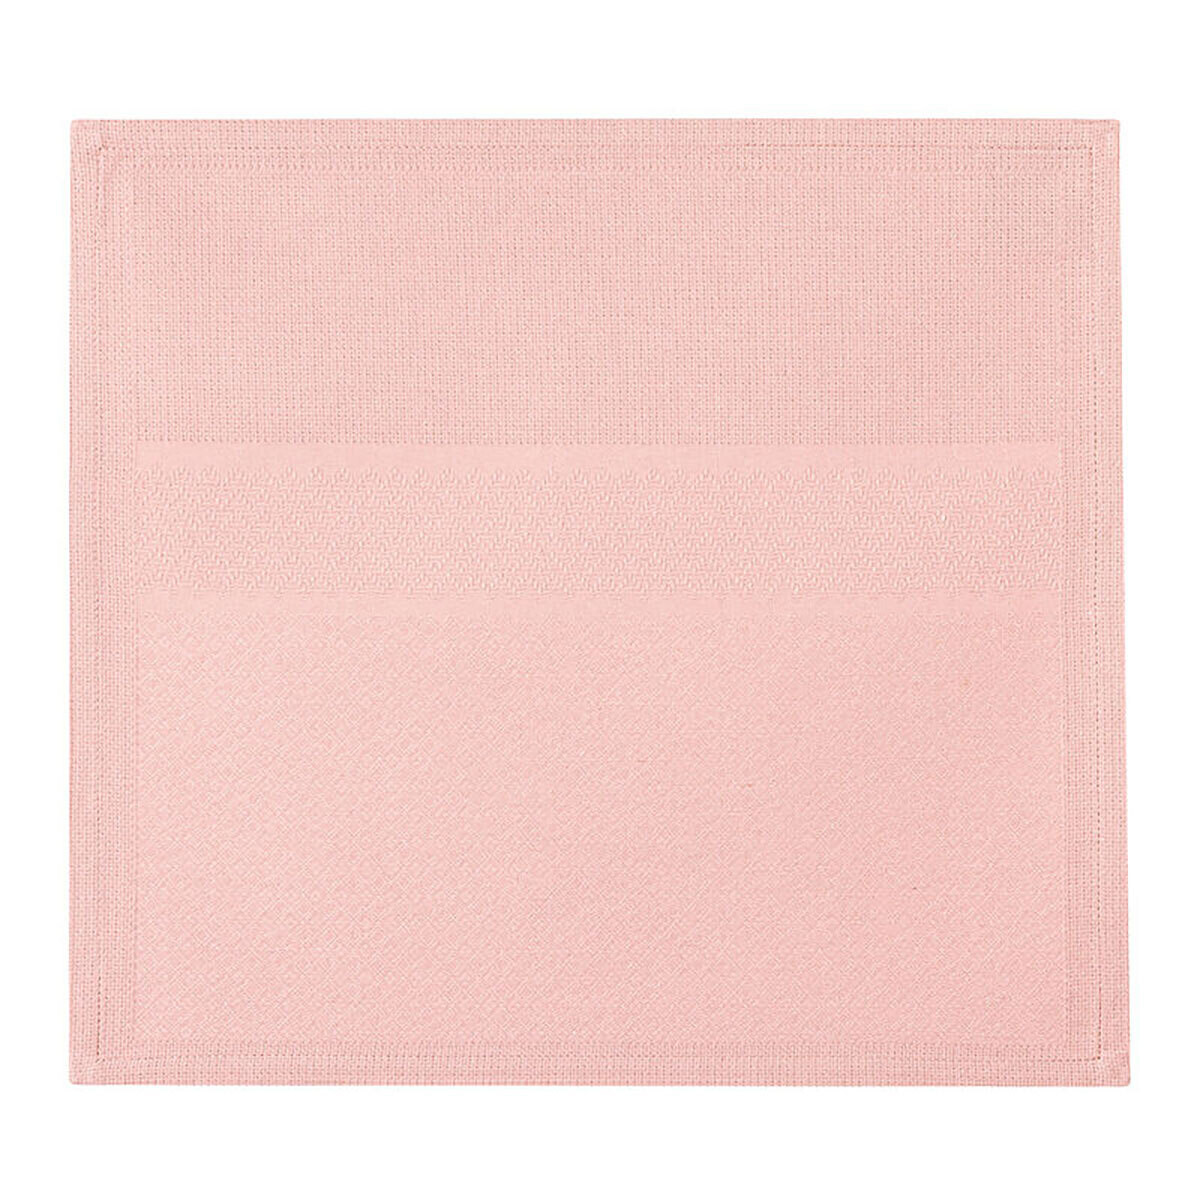 Le Jacquard Francais Slow Life Re-Use Pink Napkin 28710 Set of 4